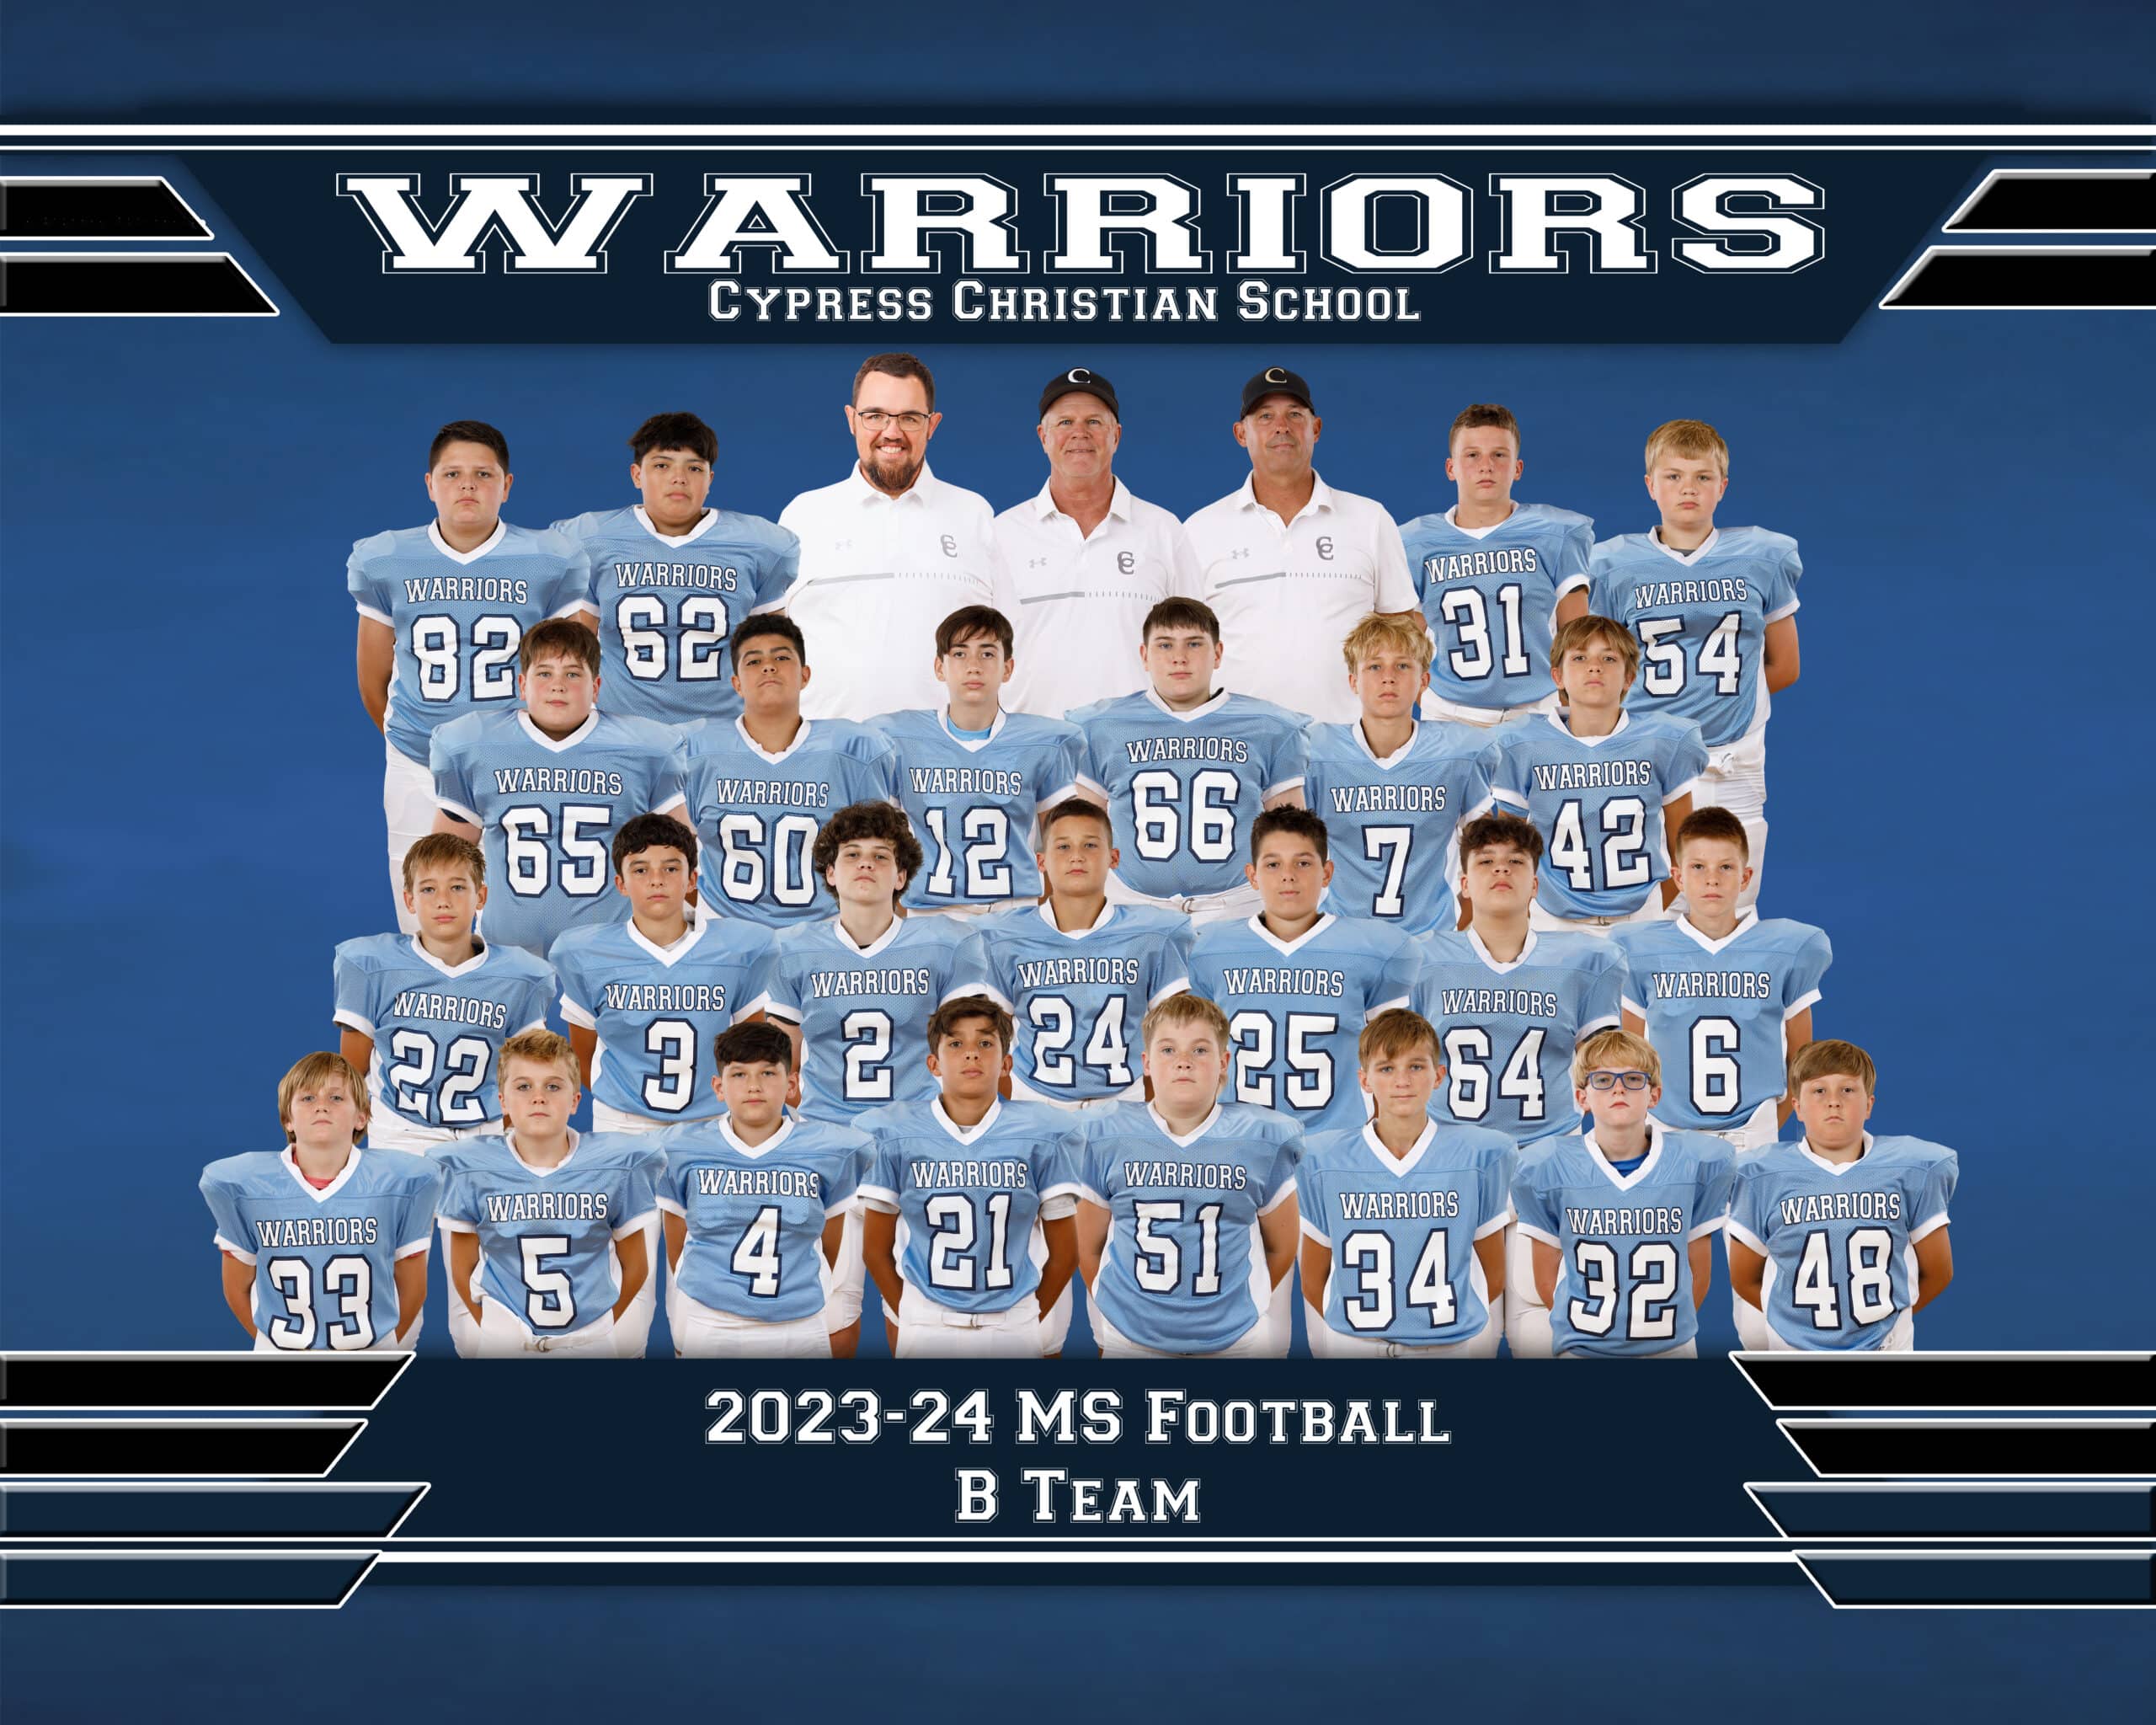 Middle School Football B Team